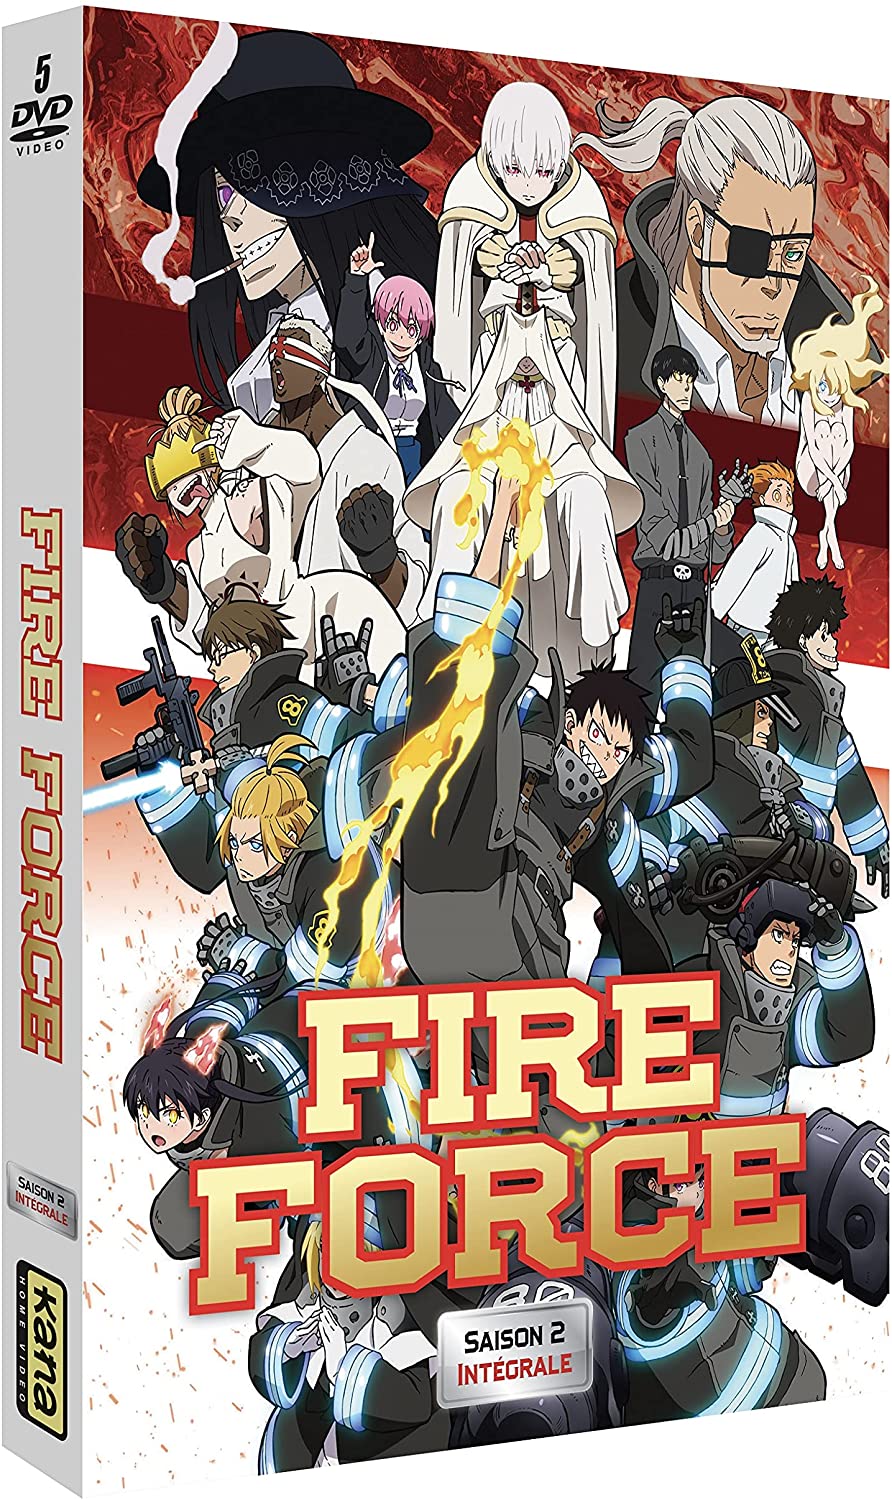 Fire Force - Saison 2 chez Kana Home Video 814510